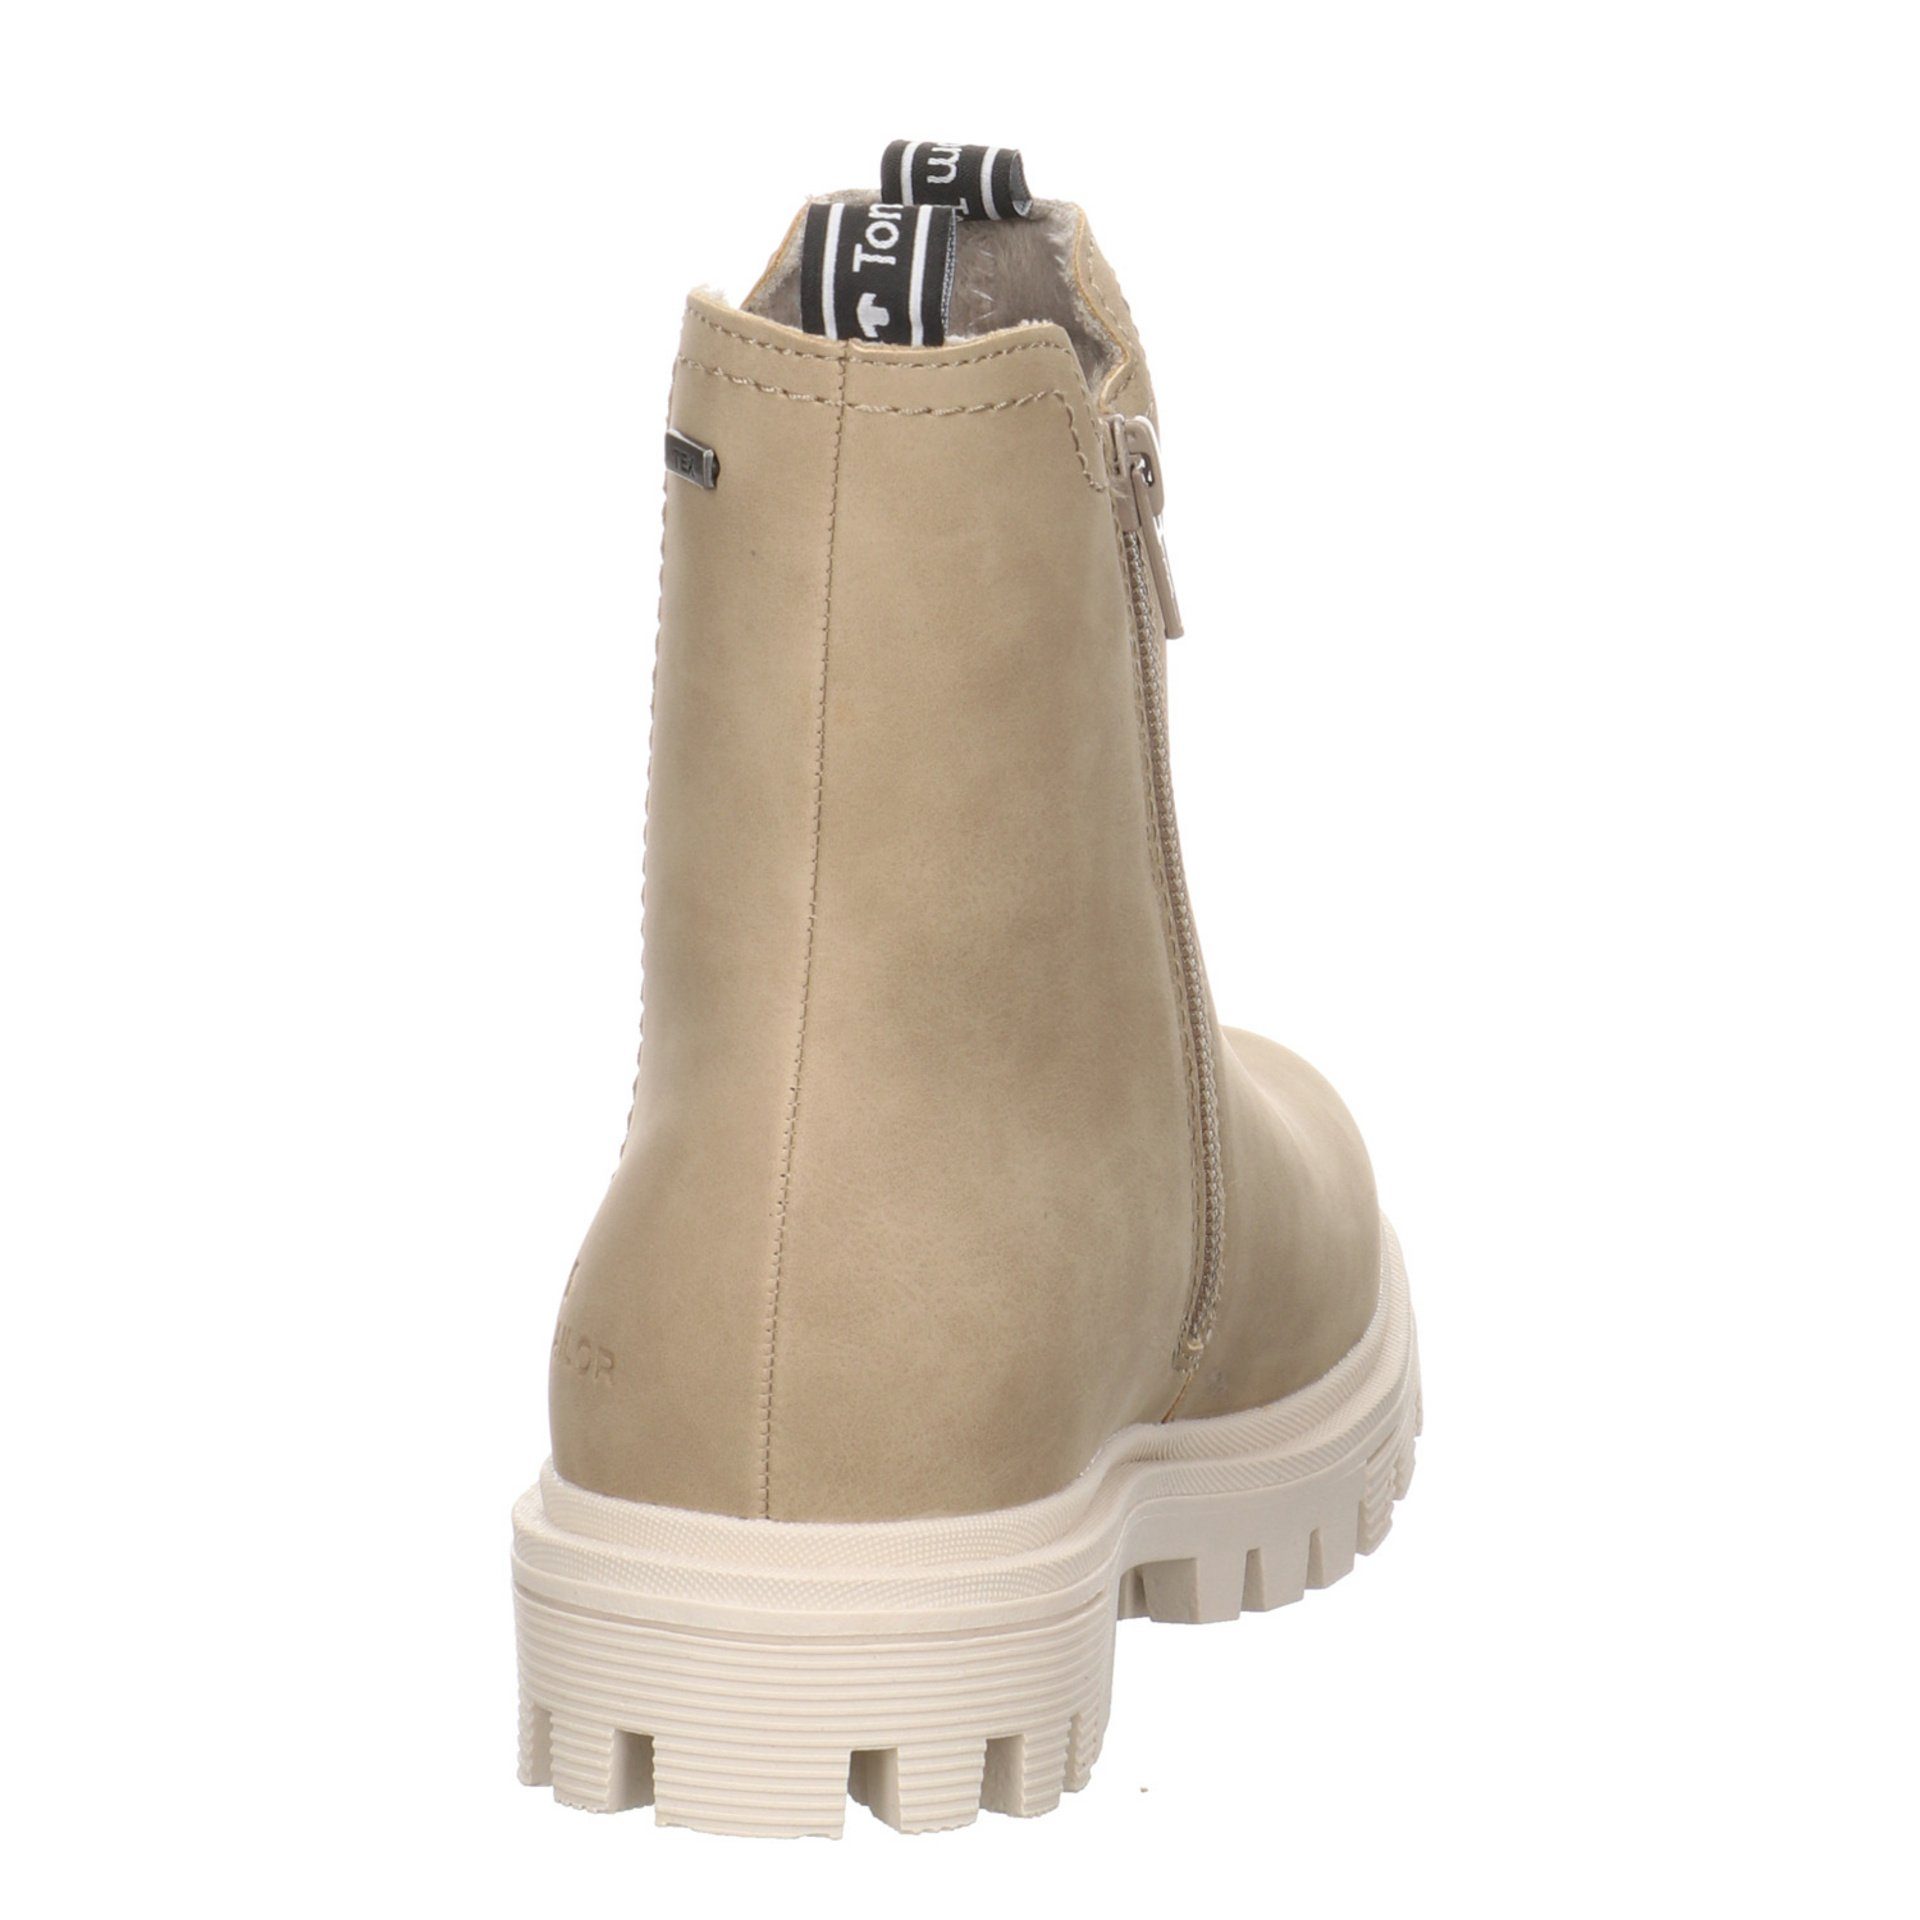 TAILOR Mädchen Chelsea Boots Kinderschuhe Stiefel Synthetik TOM beige Stiefelette Schuhe